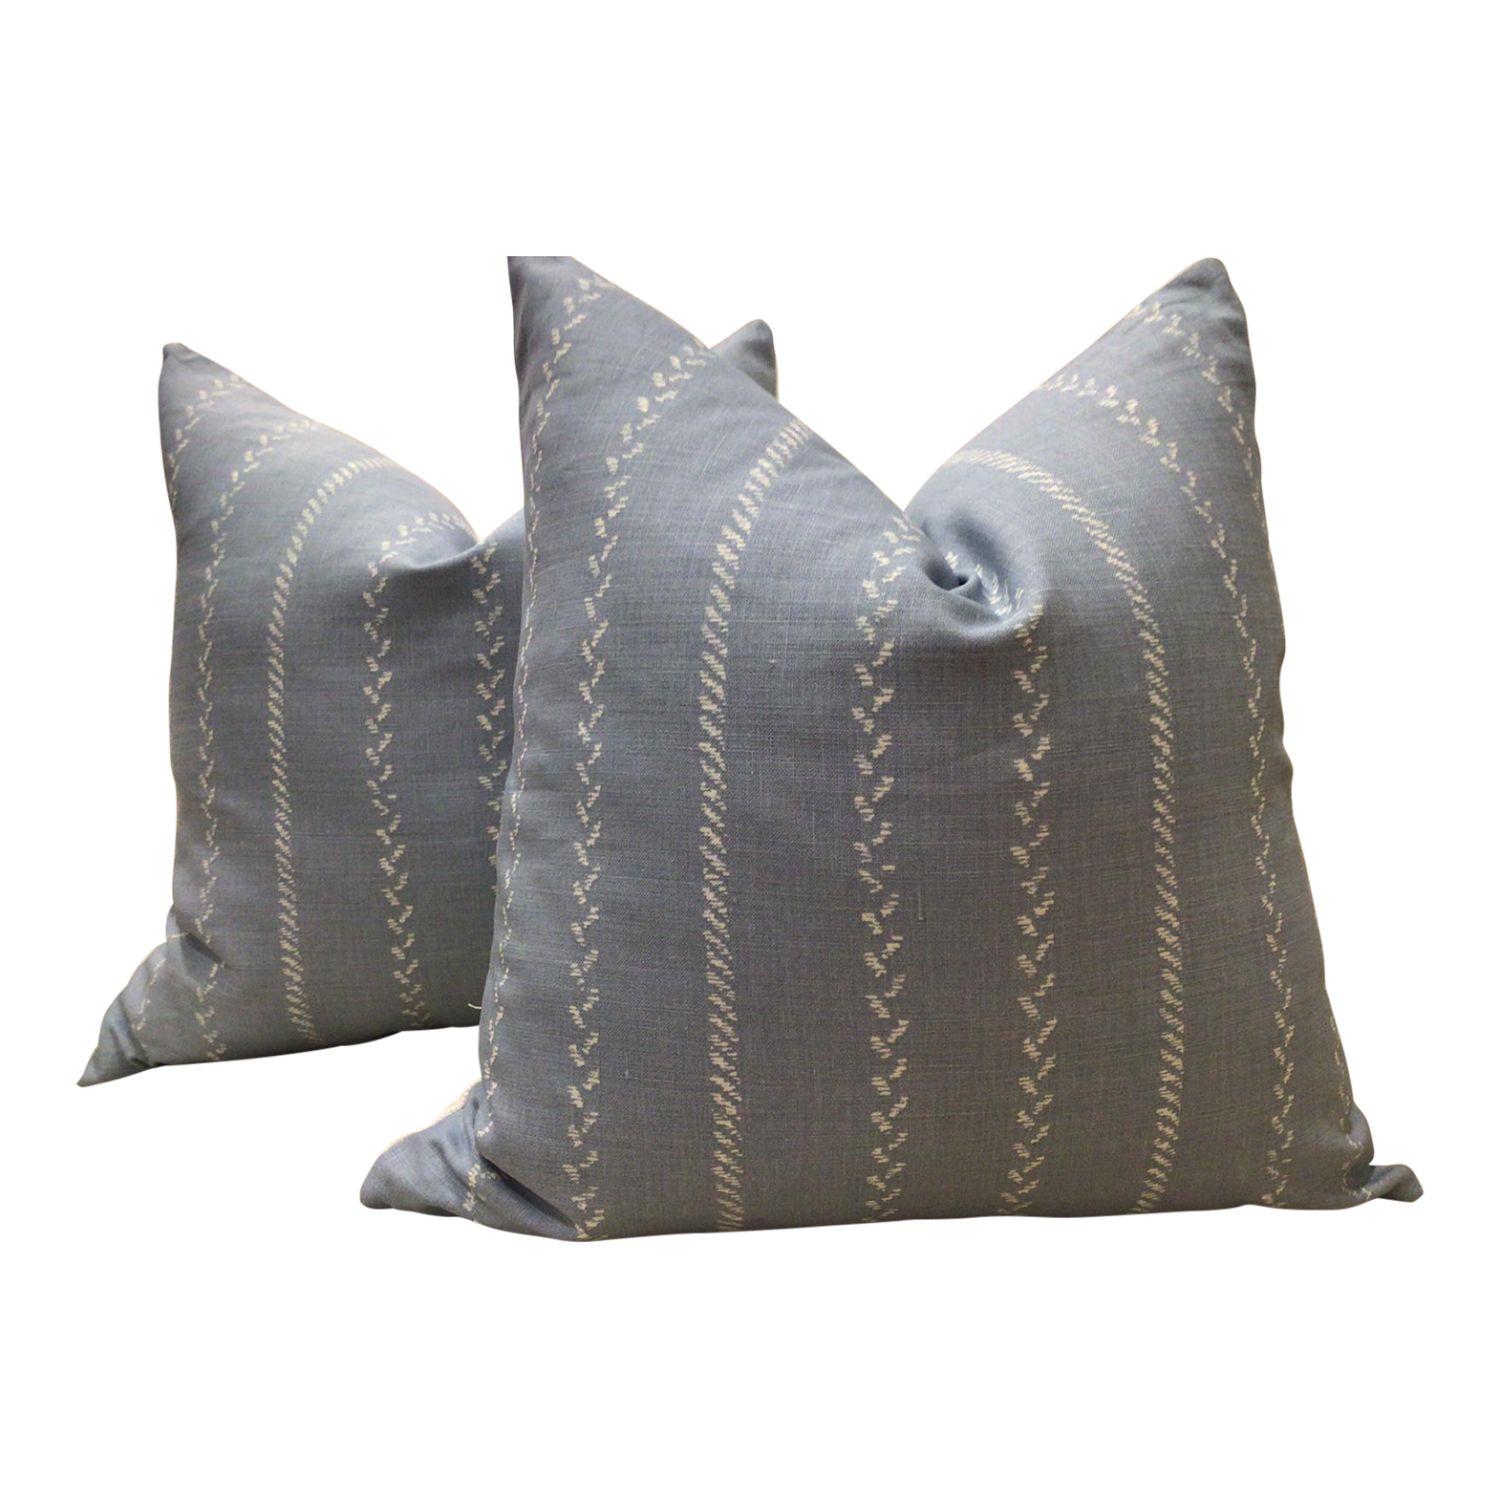 Lee Jofa “Pelham Stripe” in Soft Blue & White Pillows- a Pair For Sale